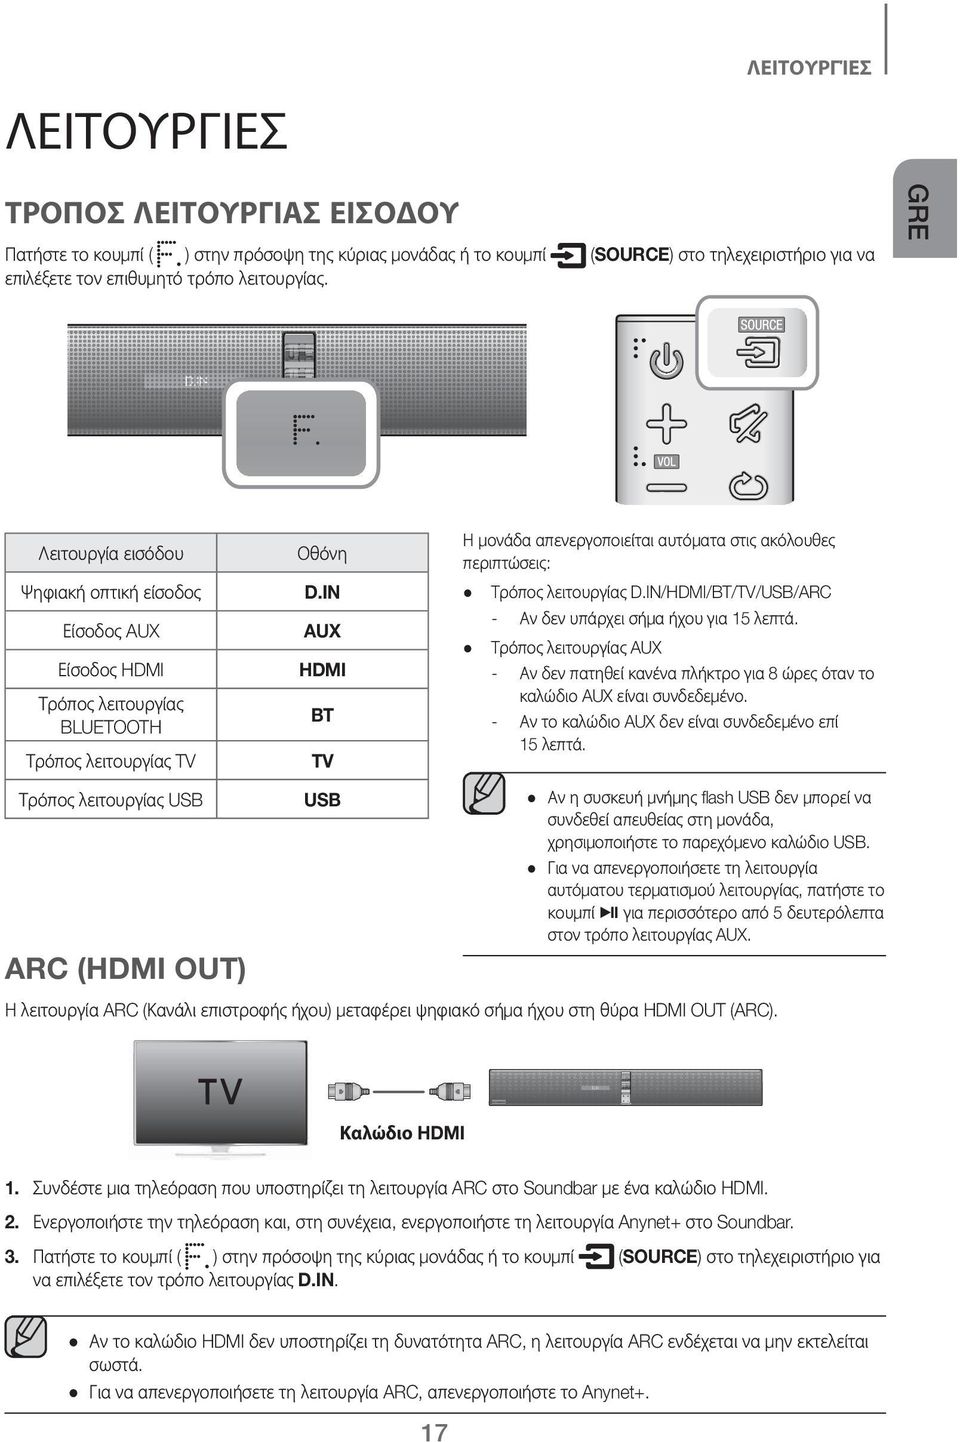 IN Είσοδος AUX AUX Είσοδος HDMI HDMI Τρόπος λειτουργίας BLUETOOTH BT Τρόπος λειτουργίας TV TV Τρόπος λειτουργίας USB USB ARC (HDMI OUT) Η μονάδα απενεργοποιείται αυτόματα στις ακόλουθες περιπτώσεις: